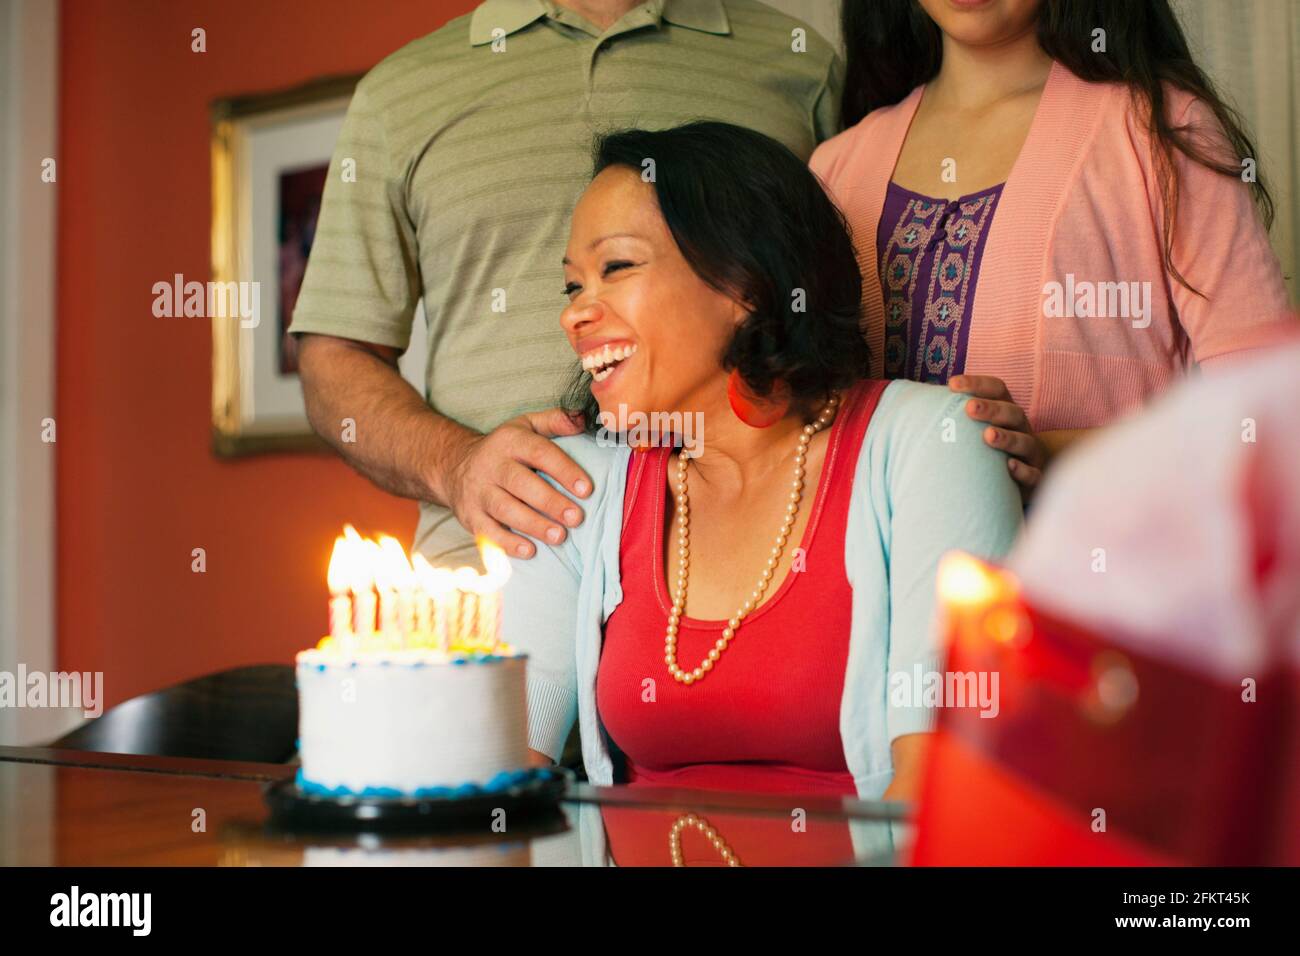 Woman smiling over birthday cake Stock Photo